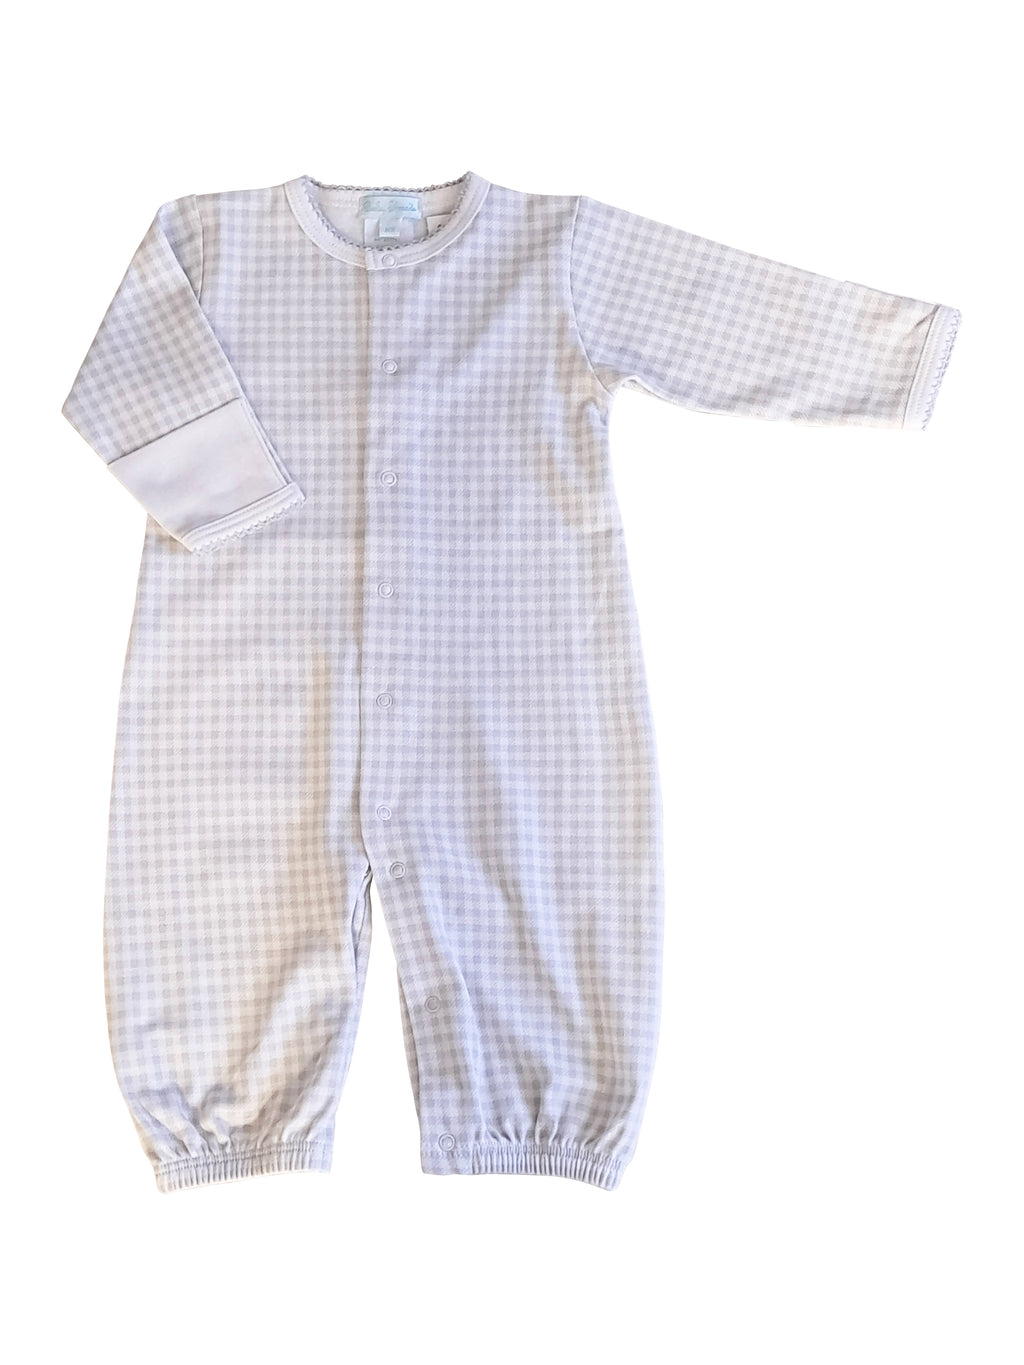 Baby's "Grey Checks" Unisex Pima Cotton Converter Gown - Little Threads Inc. Children's Clothing